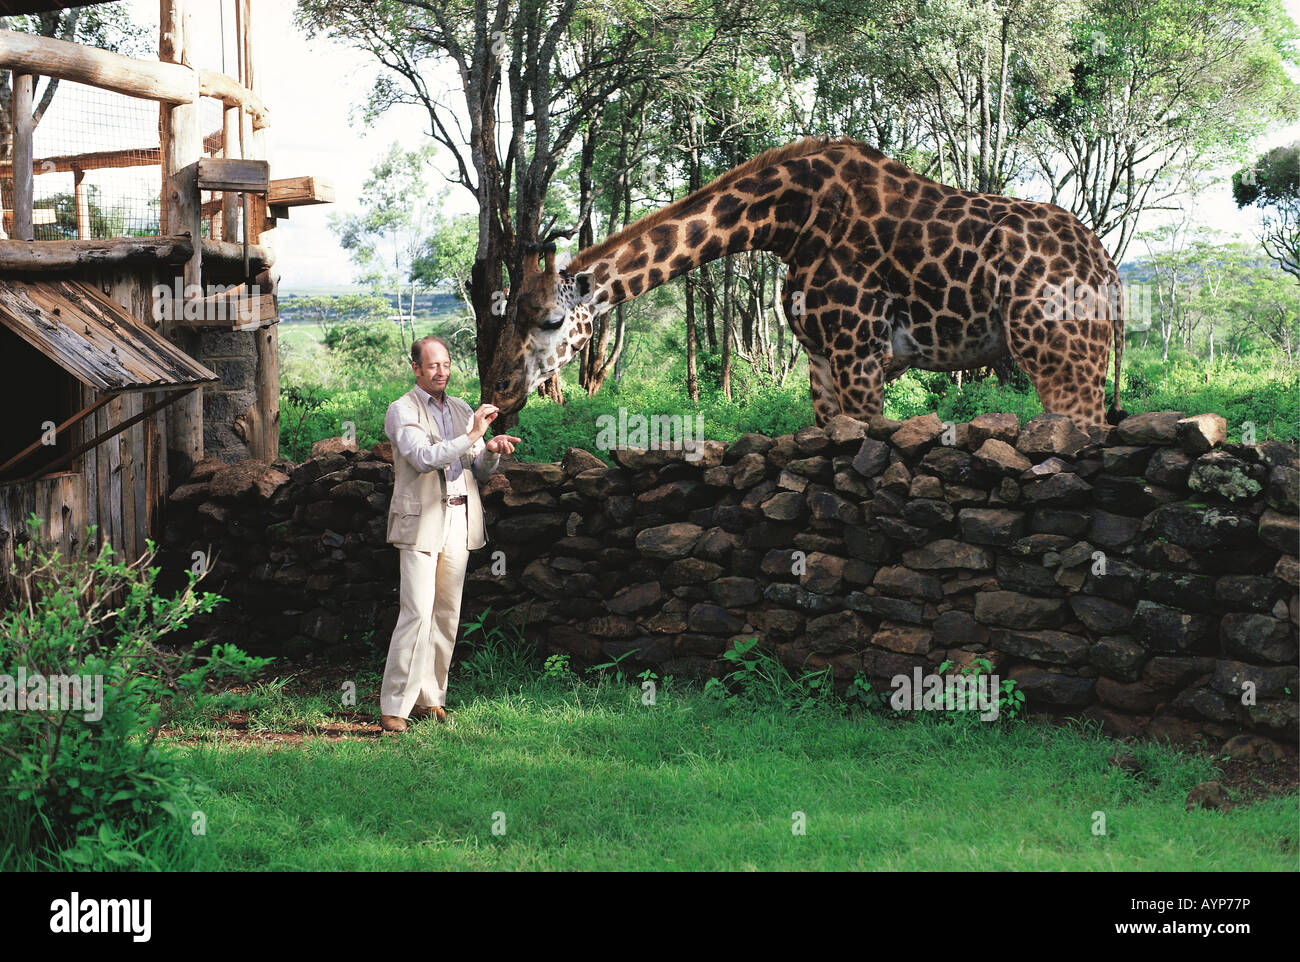 White tour guide man in safari suit feeding Rothschild s giraffe with cattle pellets at Giraffe Manor Nairobi Kenya East Africa Stock Photo